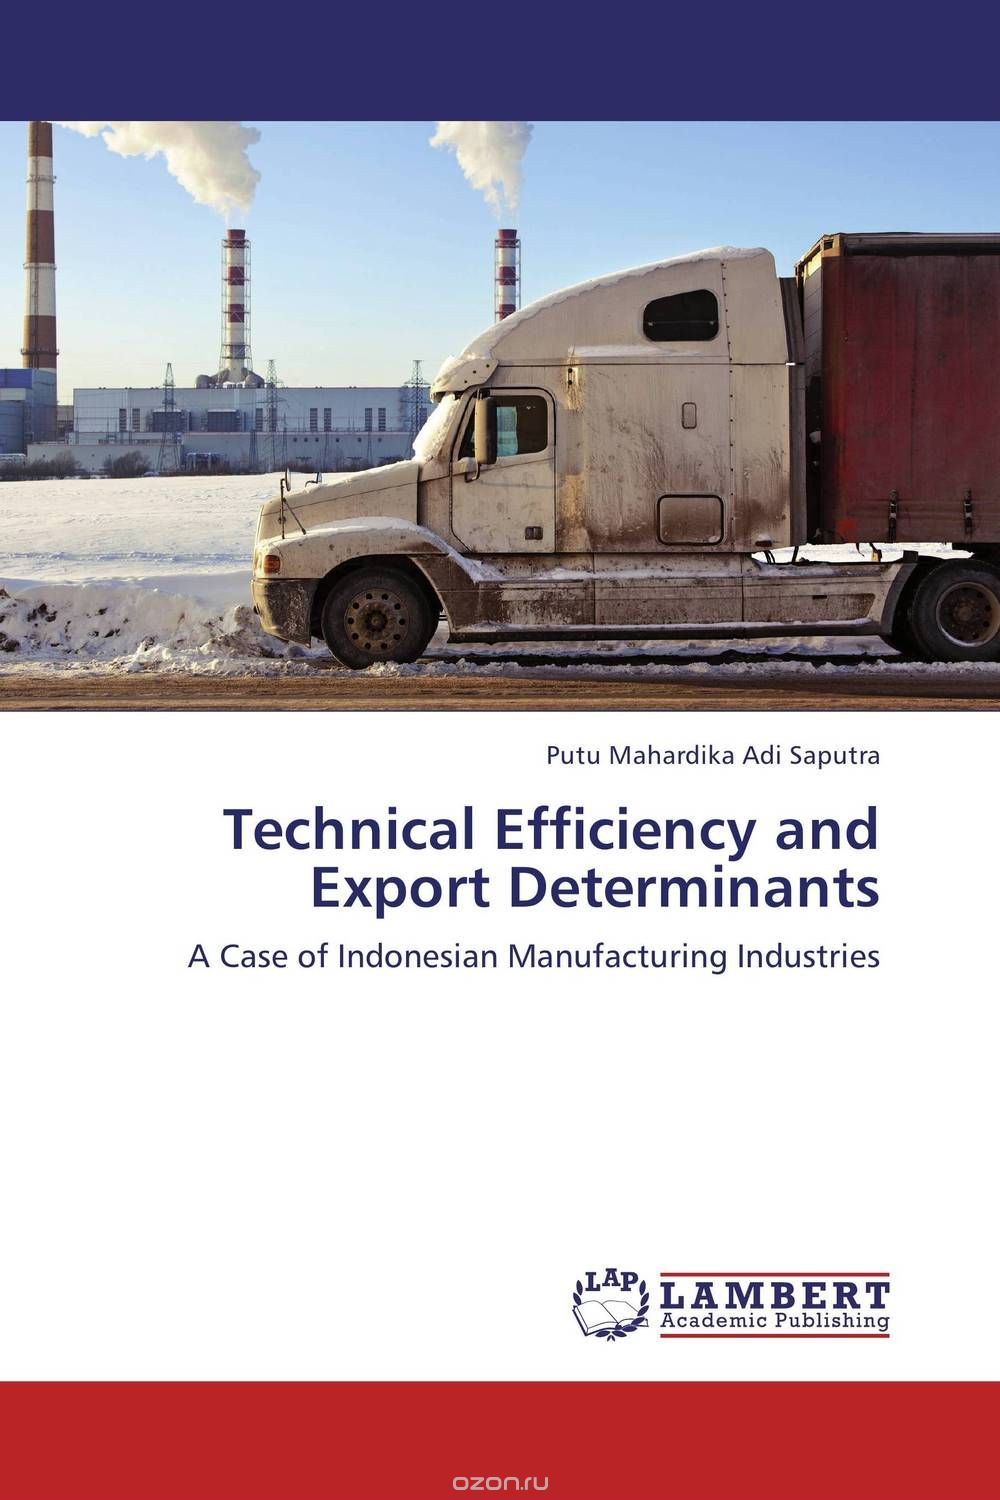 Скачать книгу "Technical Efficiency and Export Determinants"